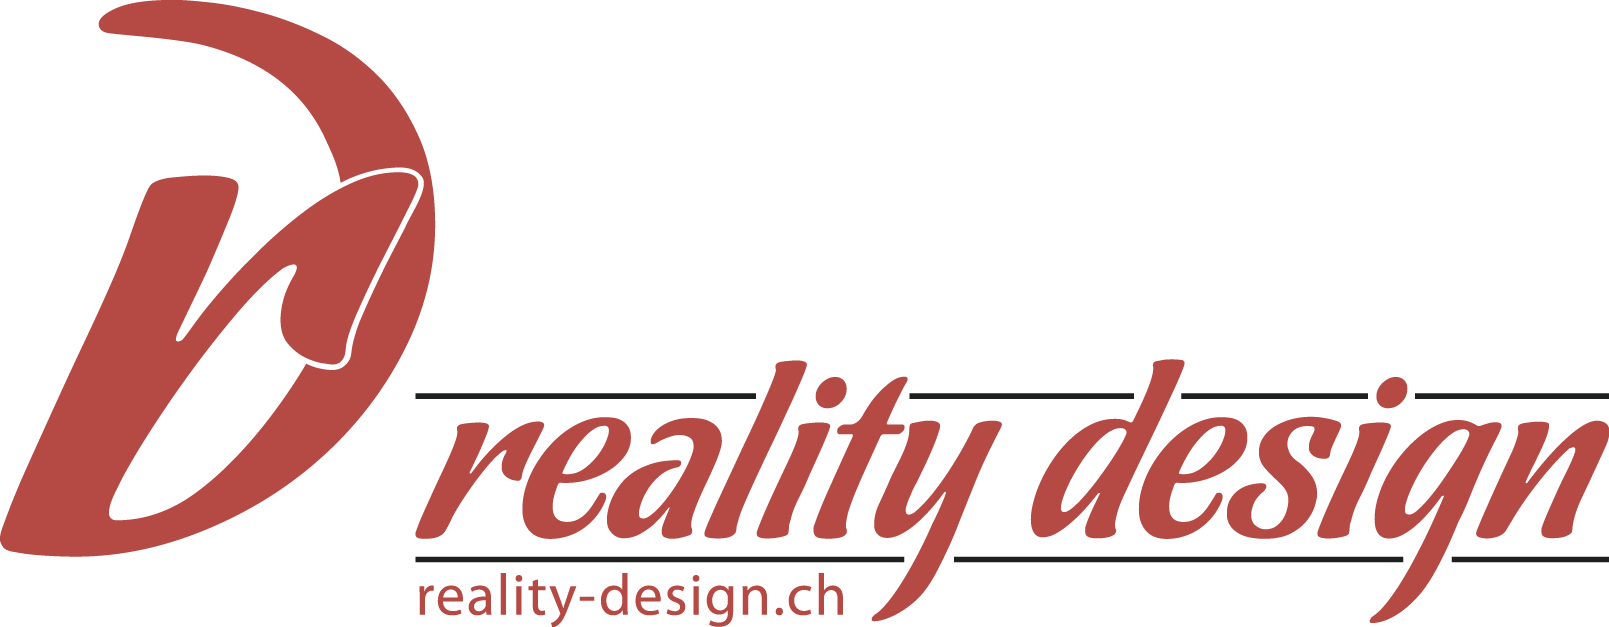 Logo REALITY DESIGN 2012 V2